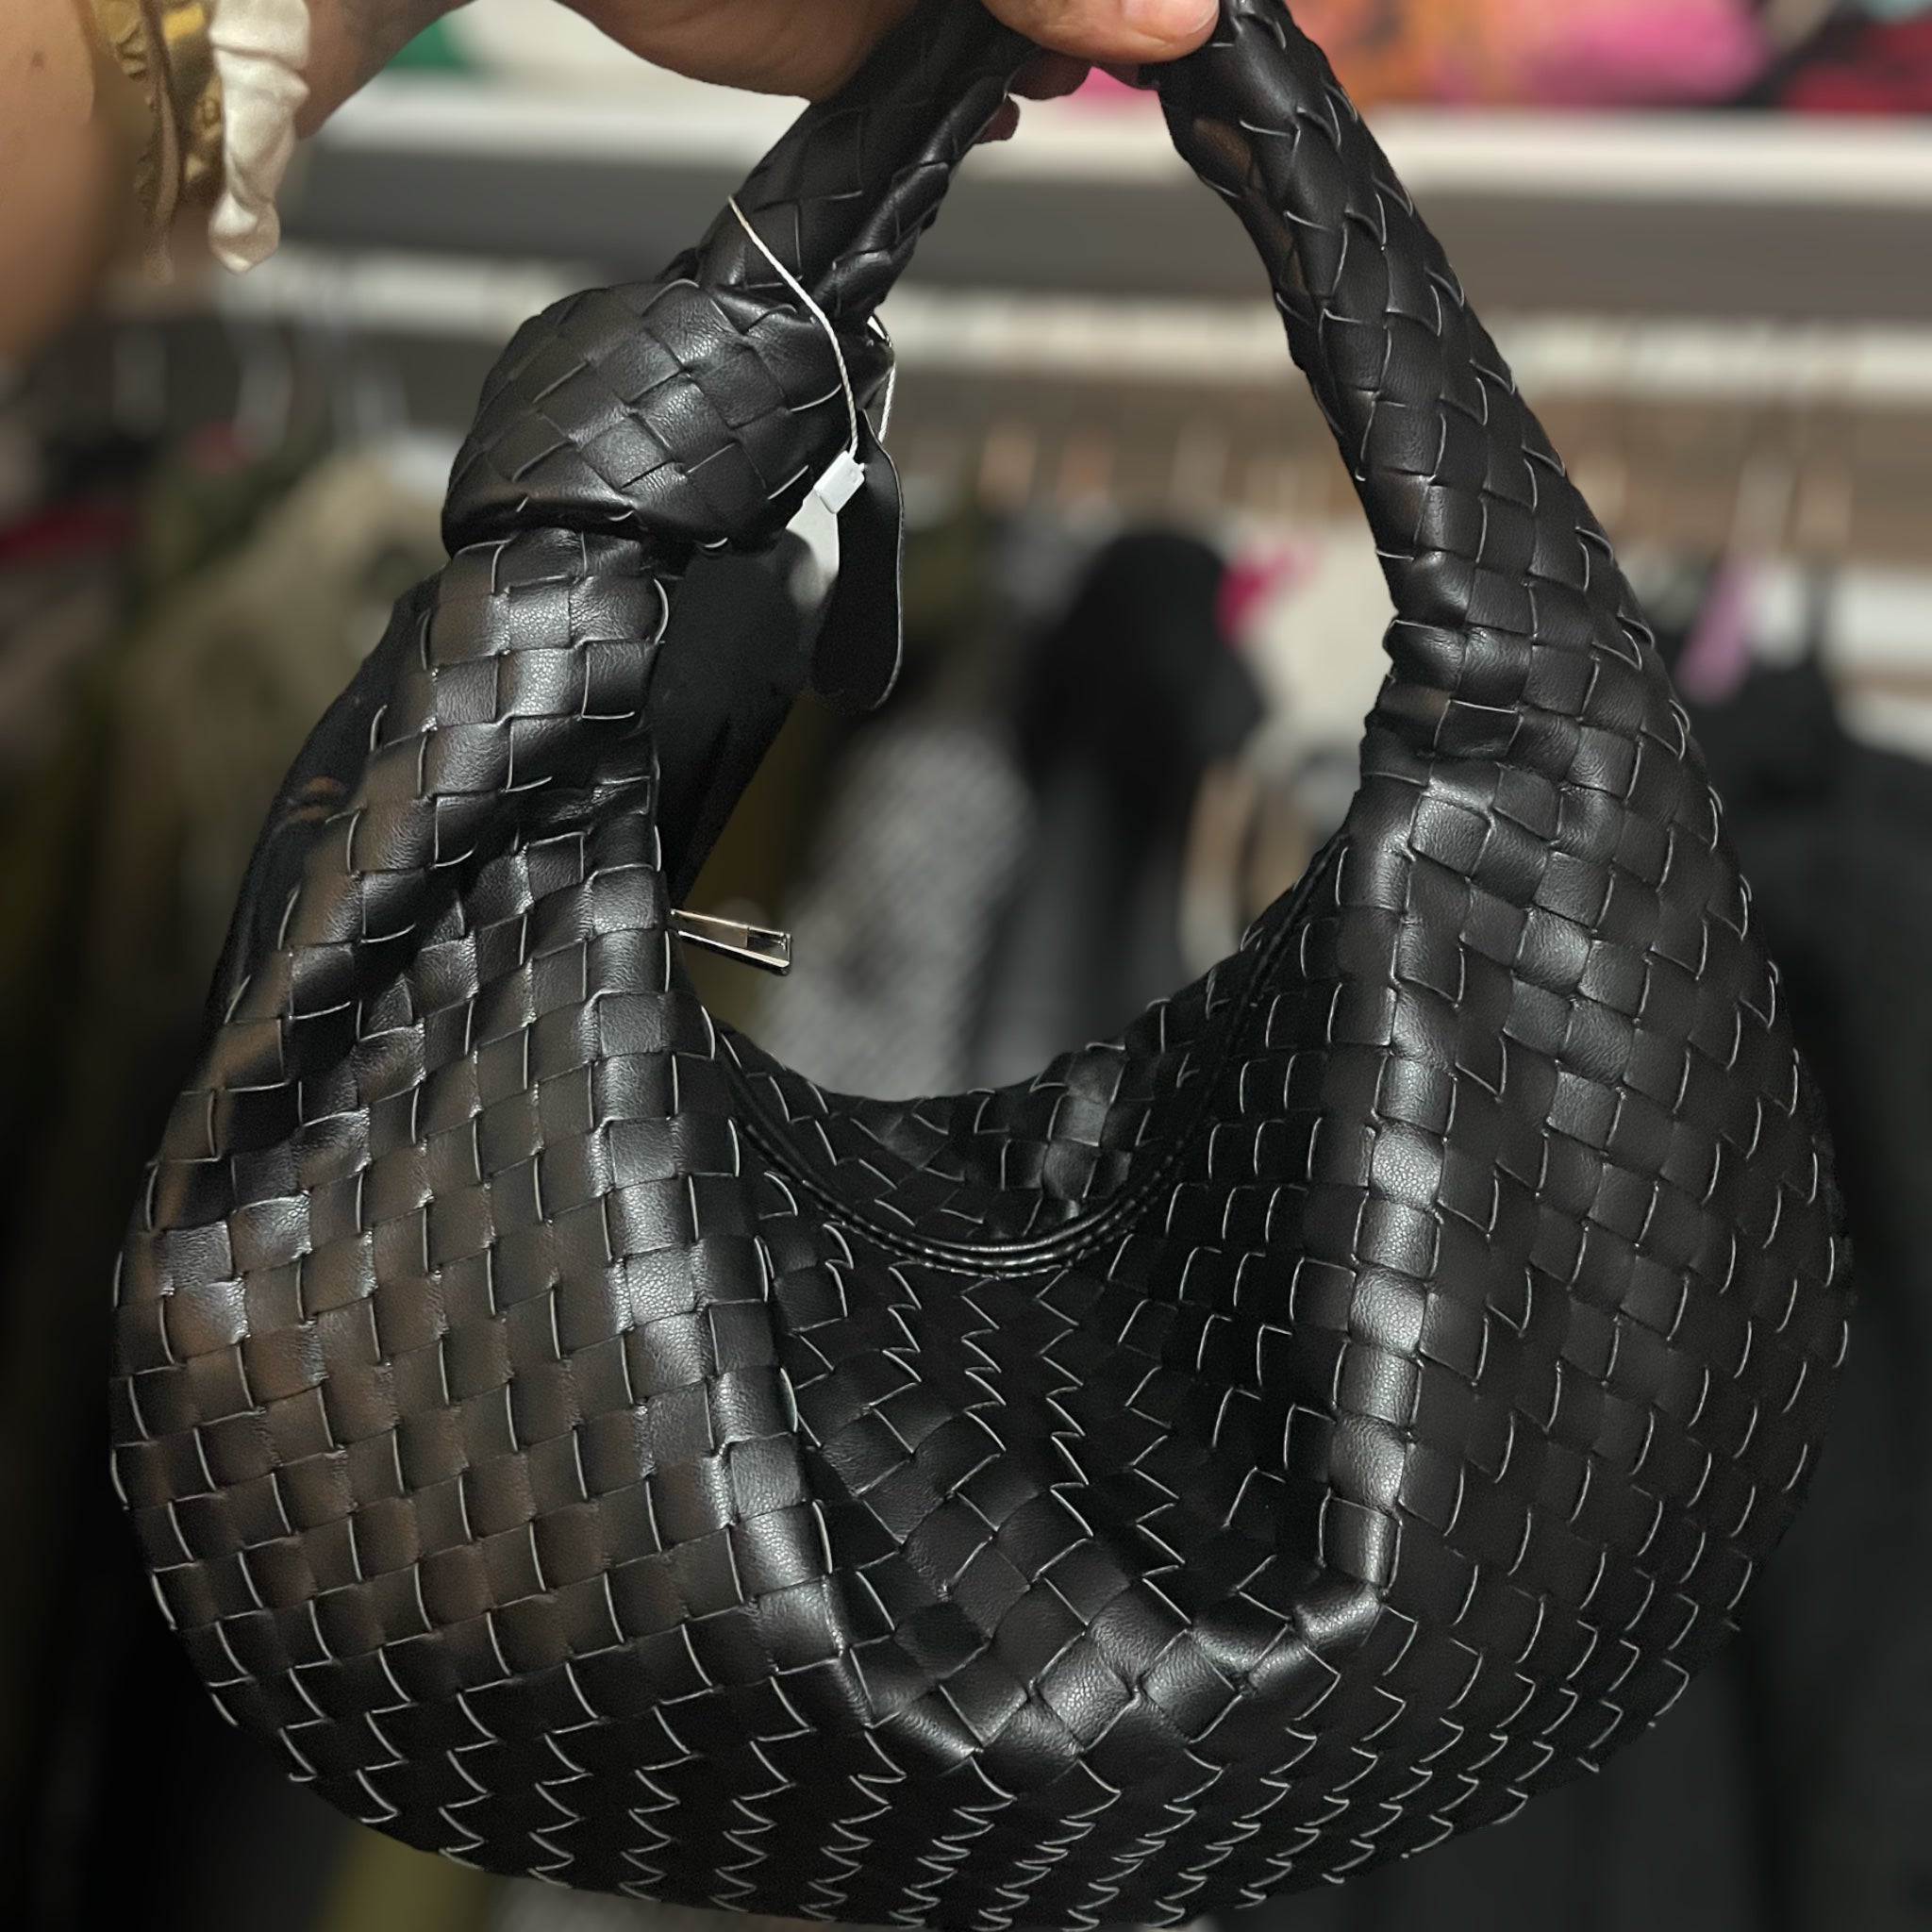 Black Woven Knot Bag